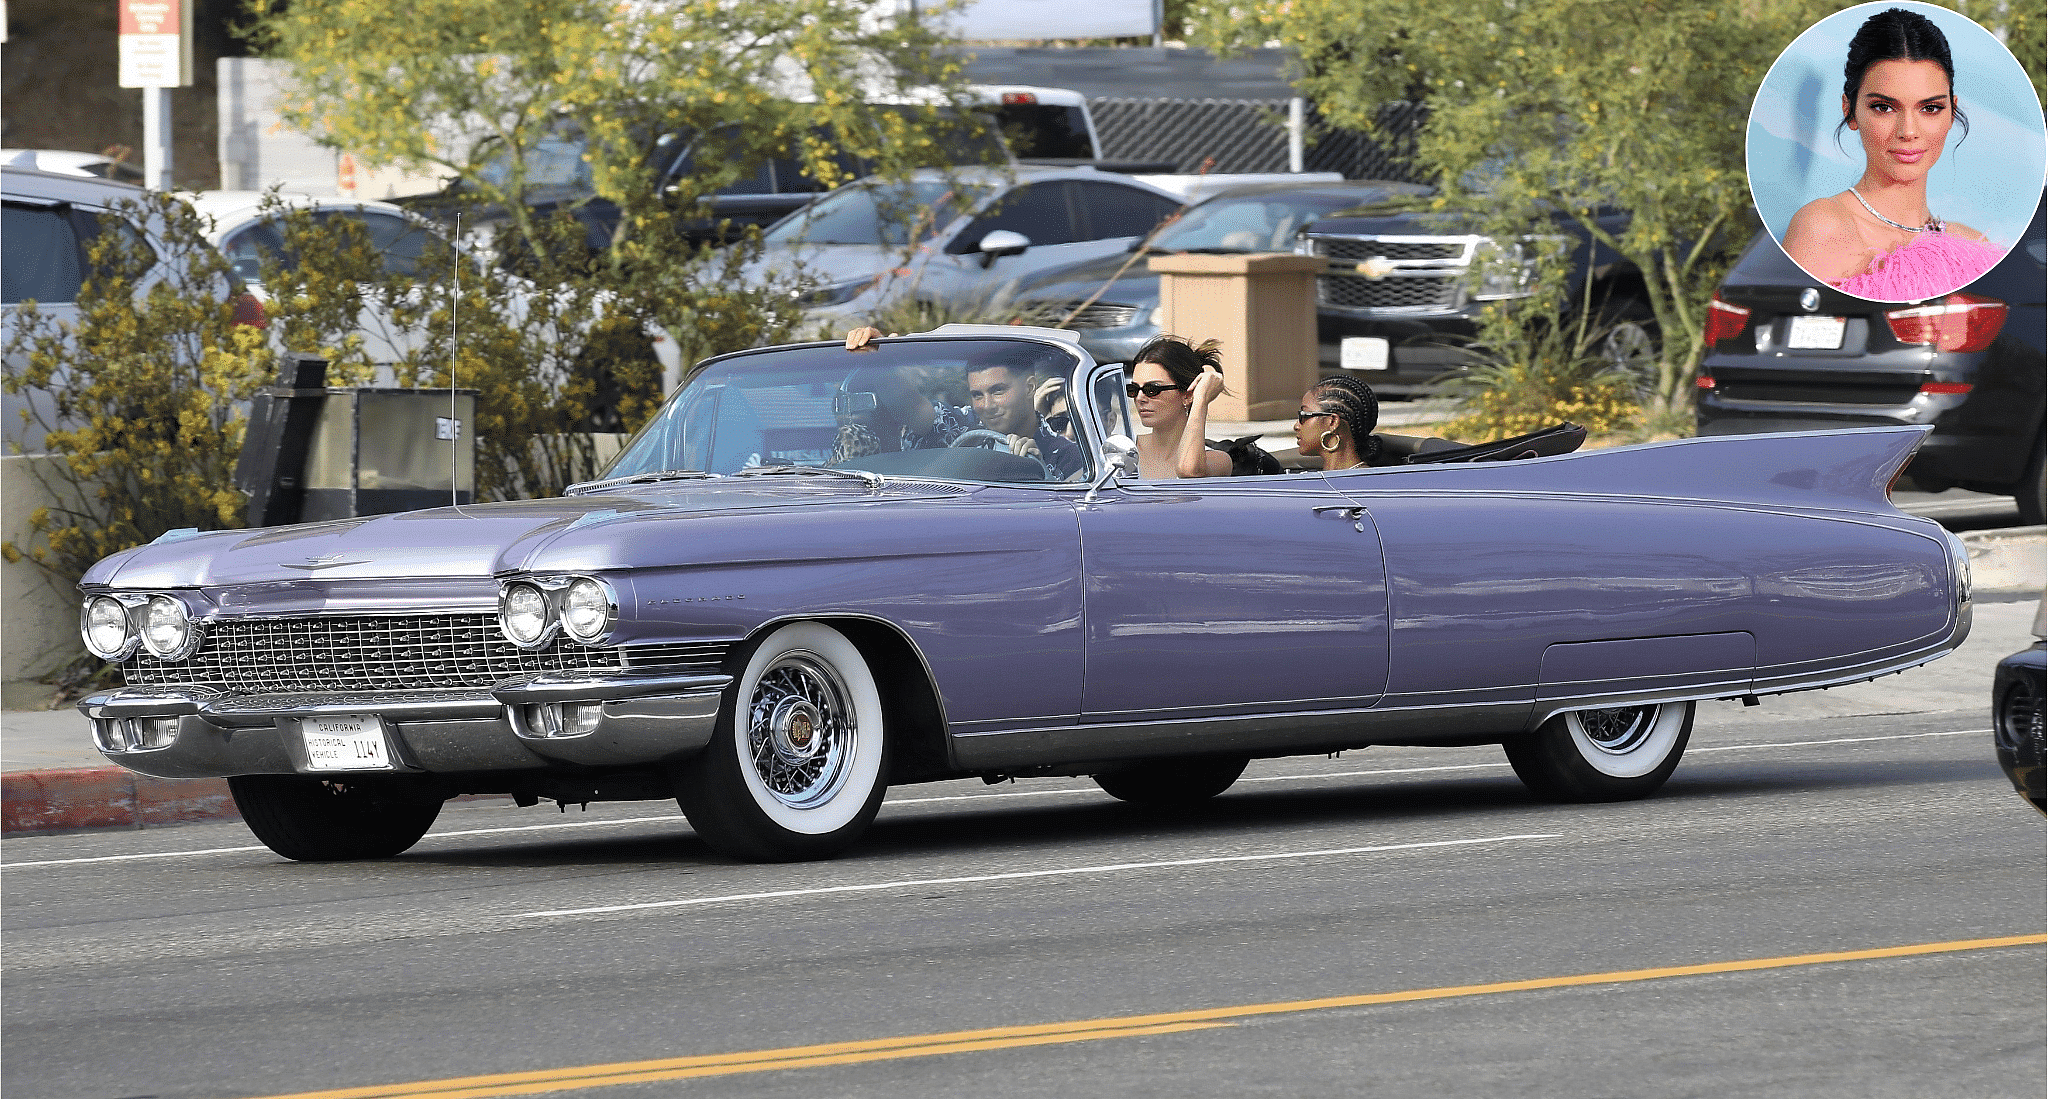 1960 Cadillac Eldorado with Kendall Jenner